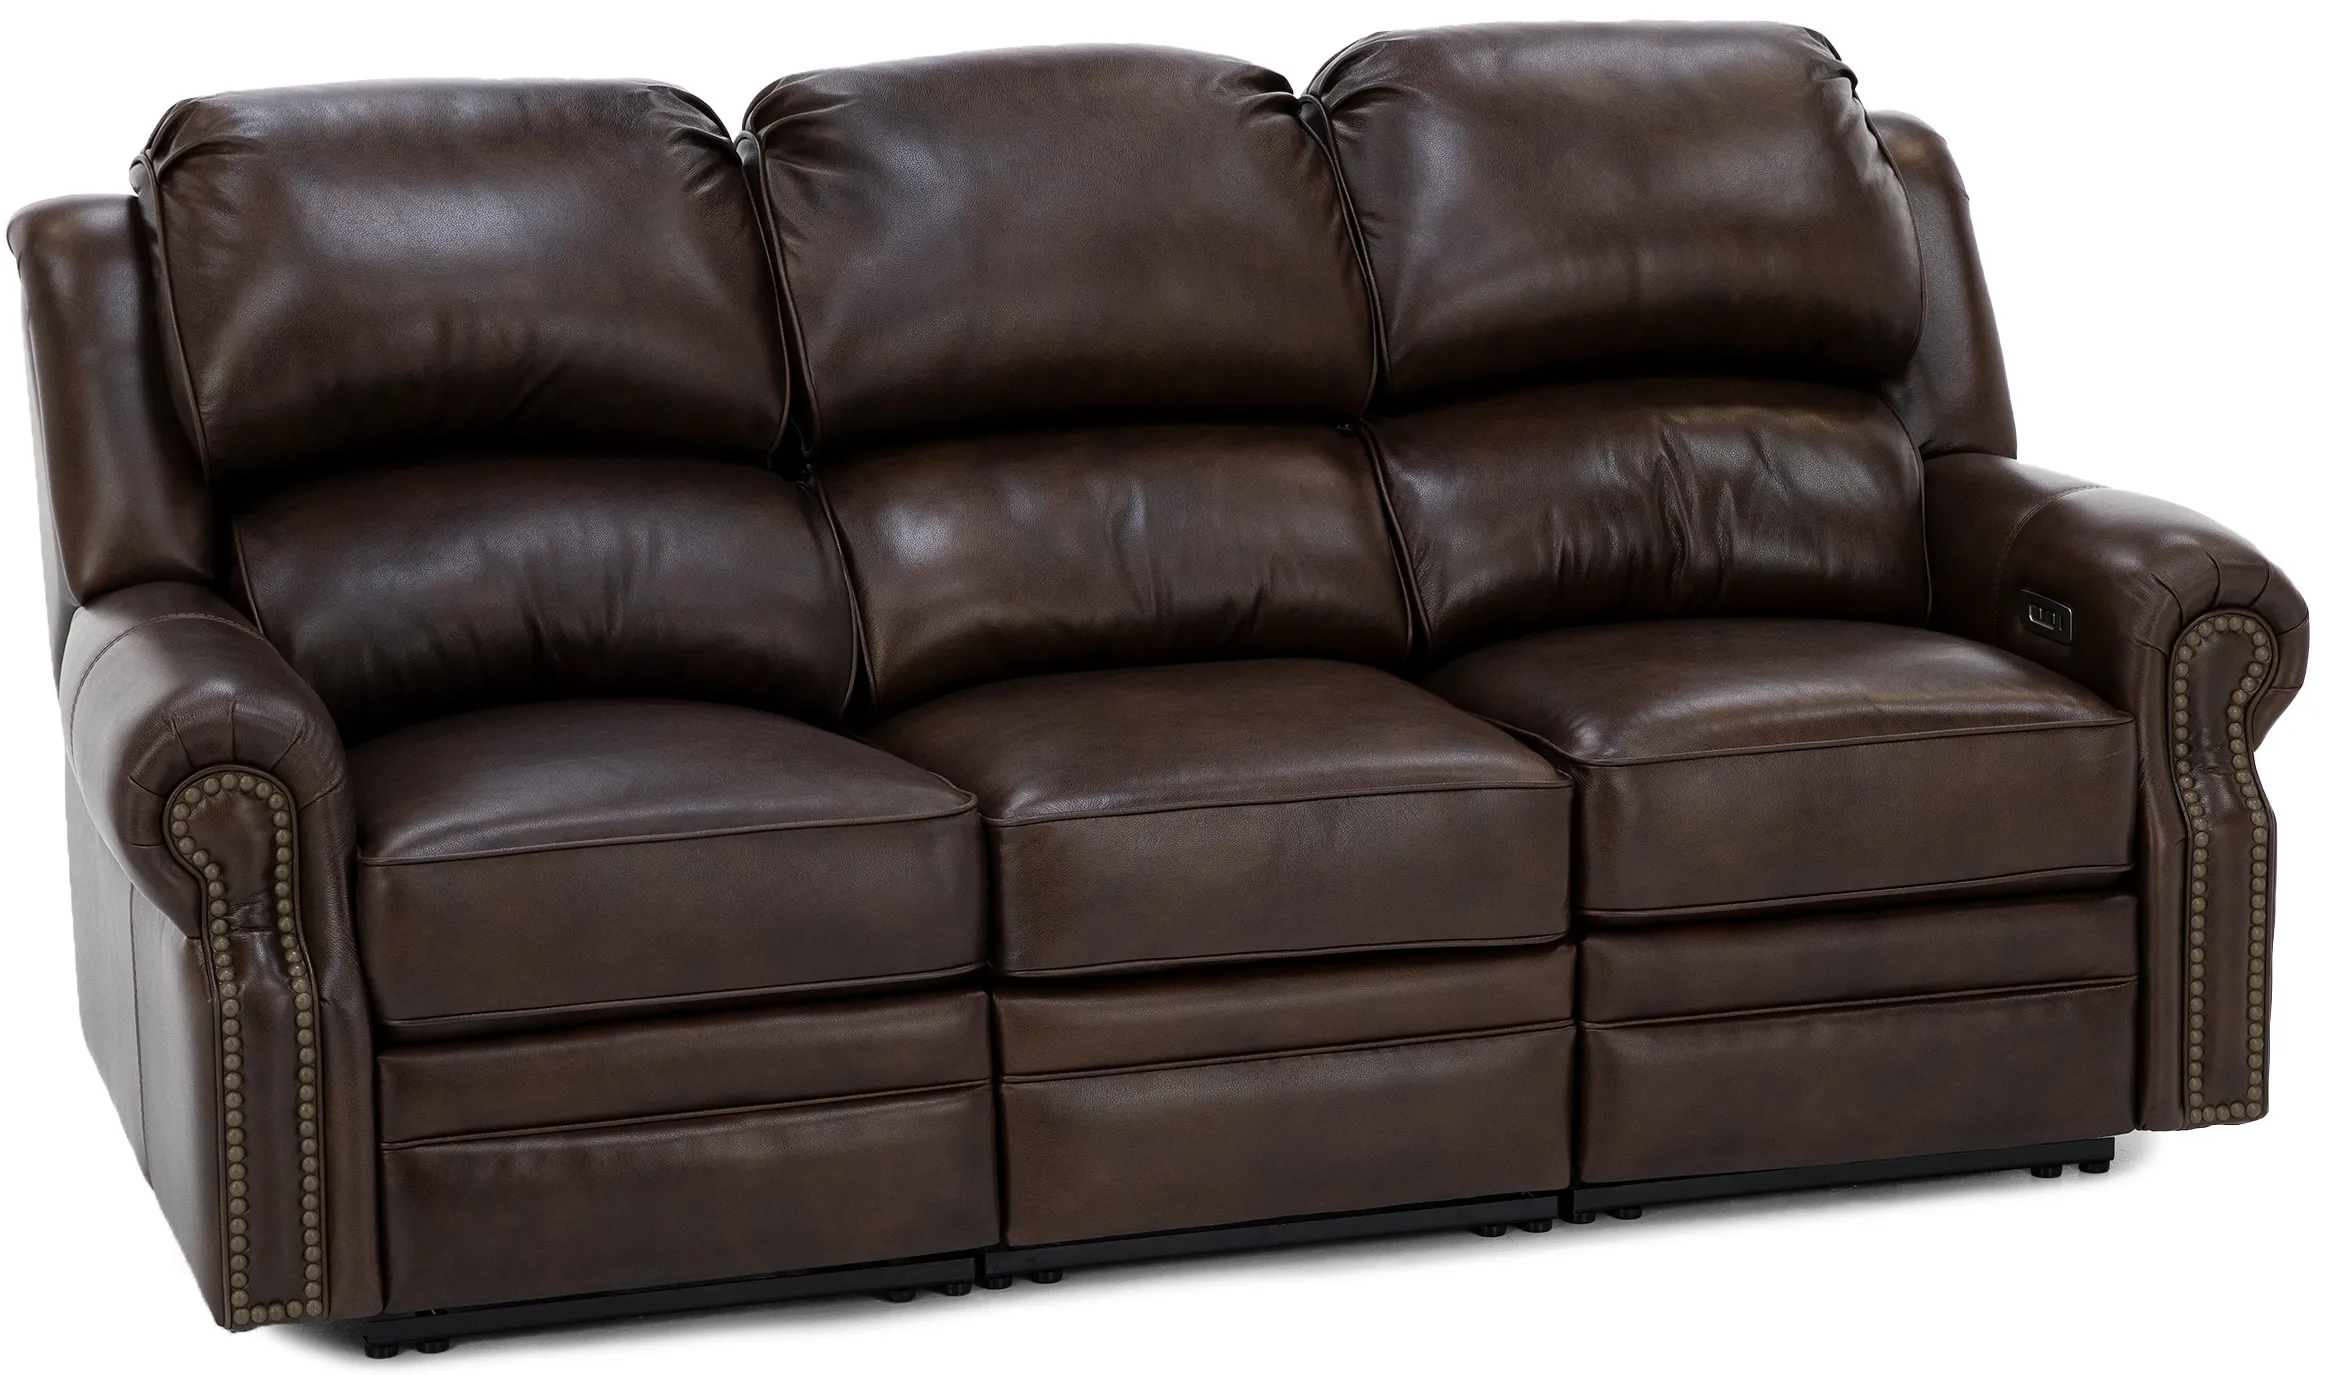 San Juan Leather 3-Pc. Power Reclining Sofa